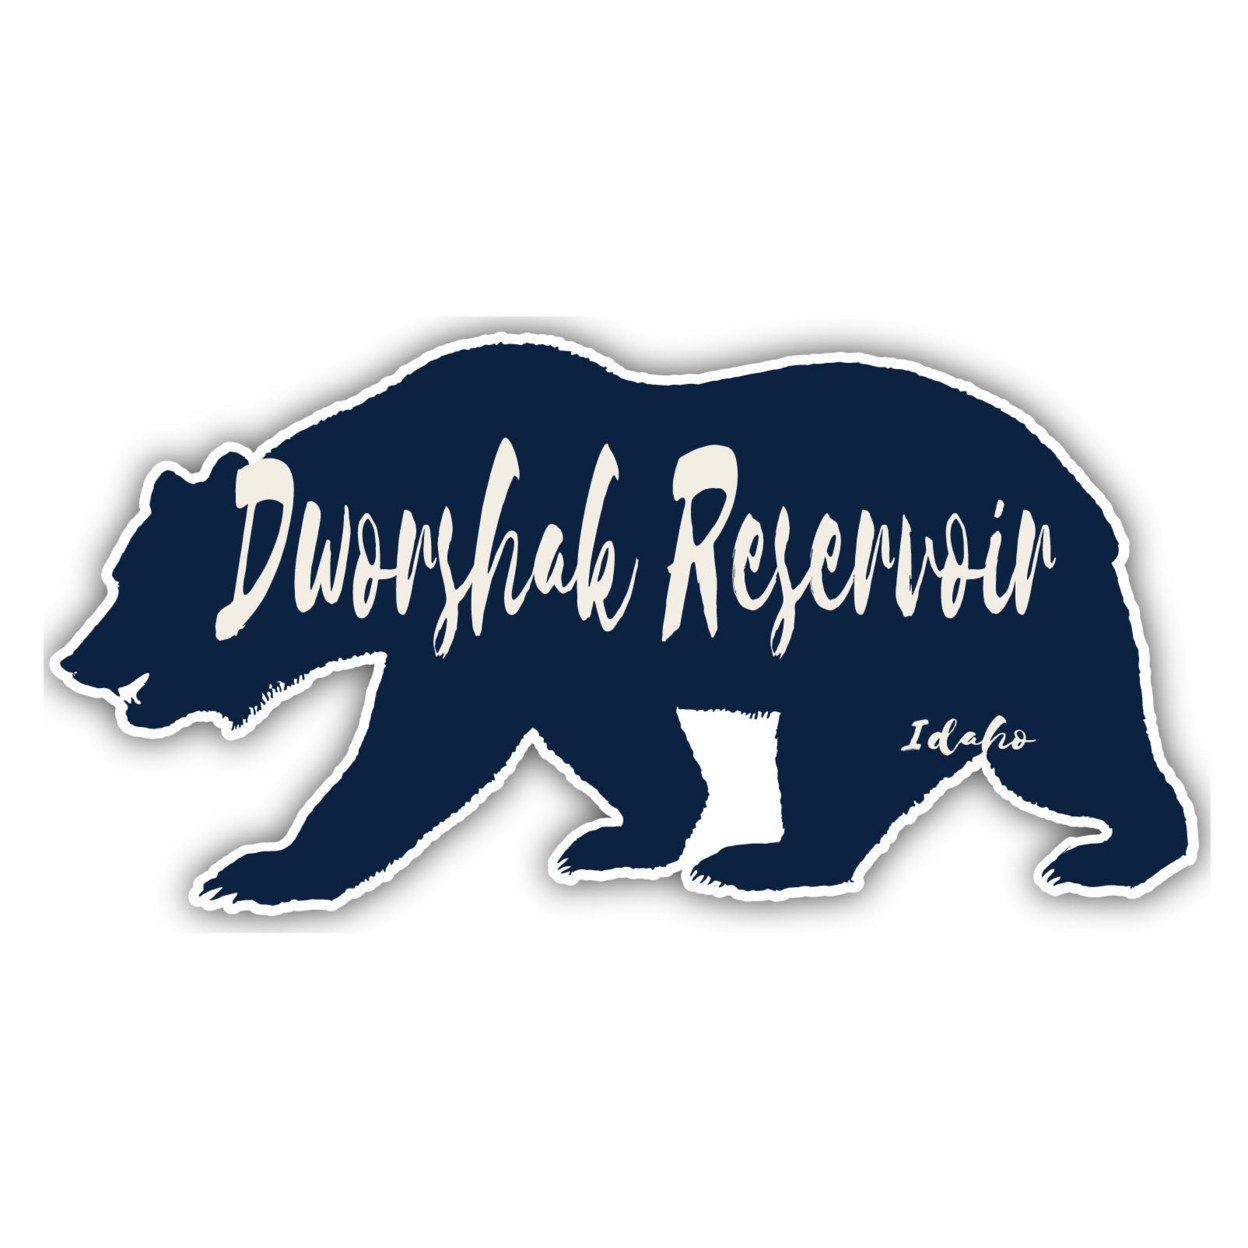 Dworshak Reservoir Idaho Souvenir Decorative Stickers (Choose Theme And Size) - 4-Pack, 2-Inch, Tent